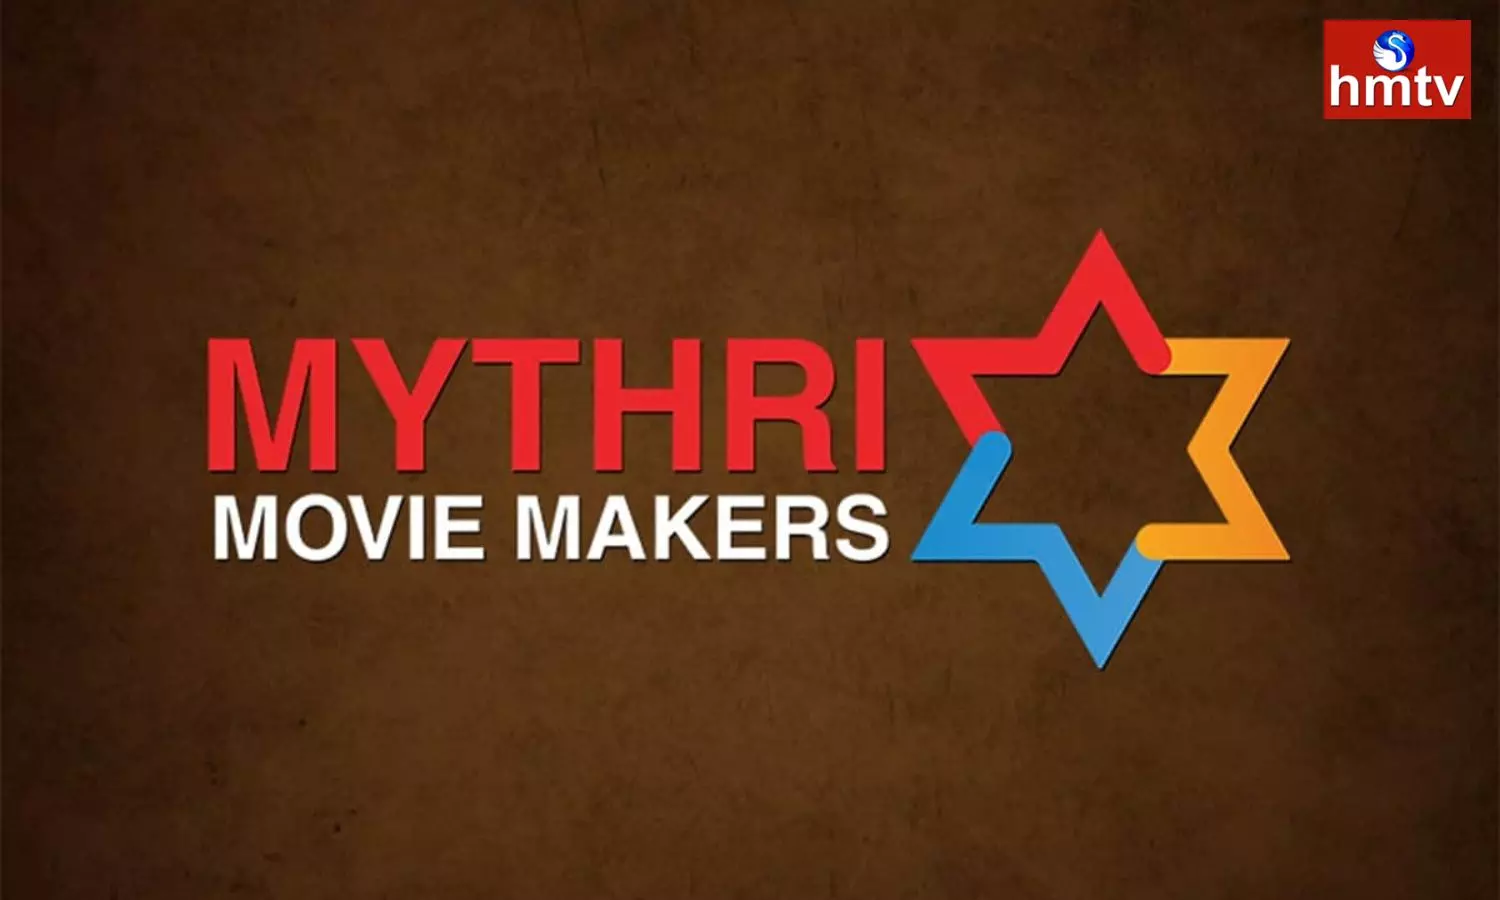 Mythri Movie Makers Struggle with Smaller Films